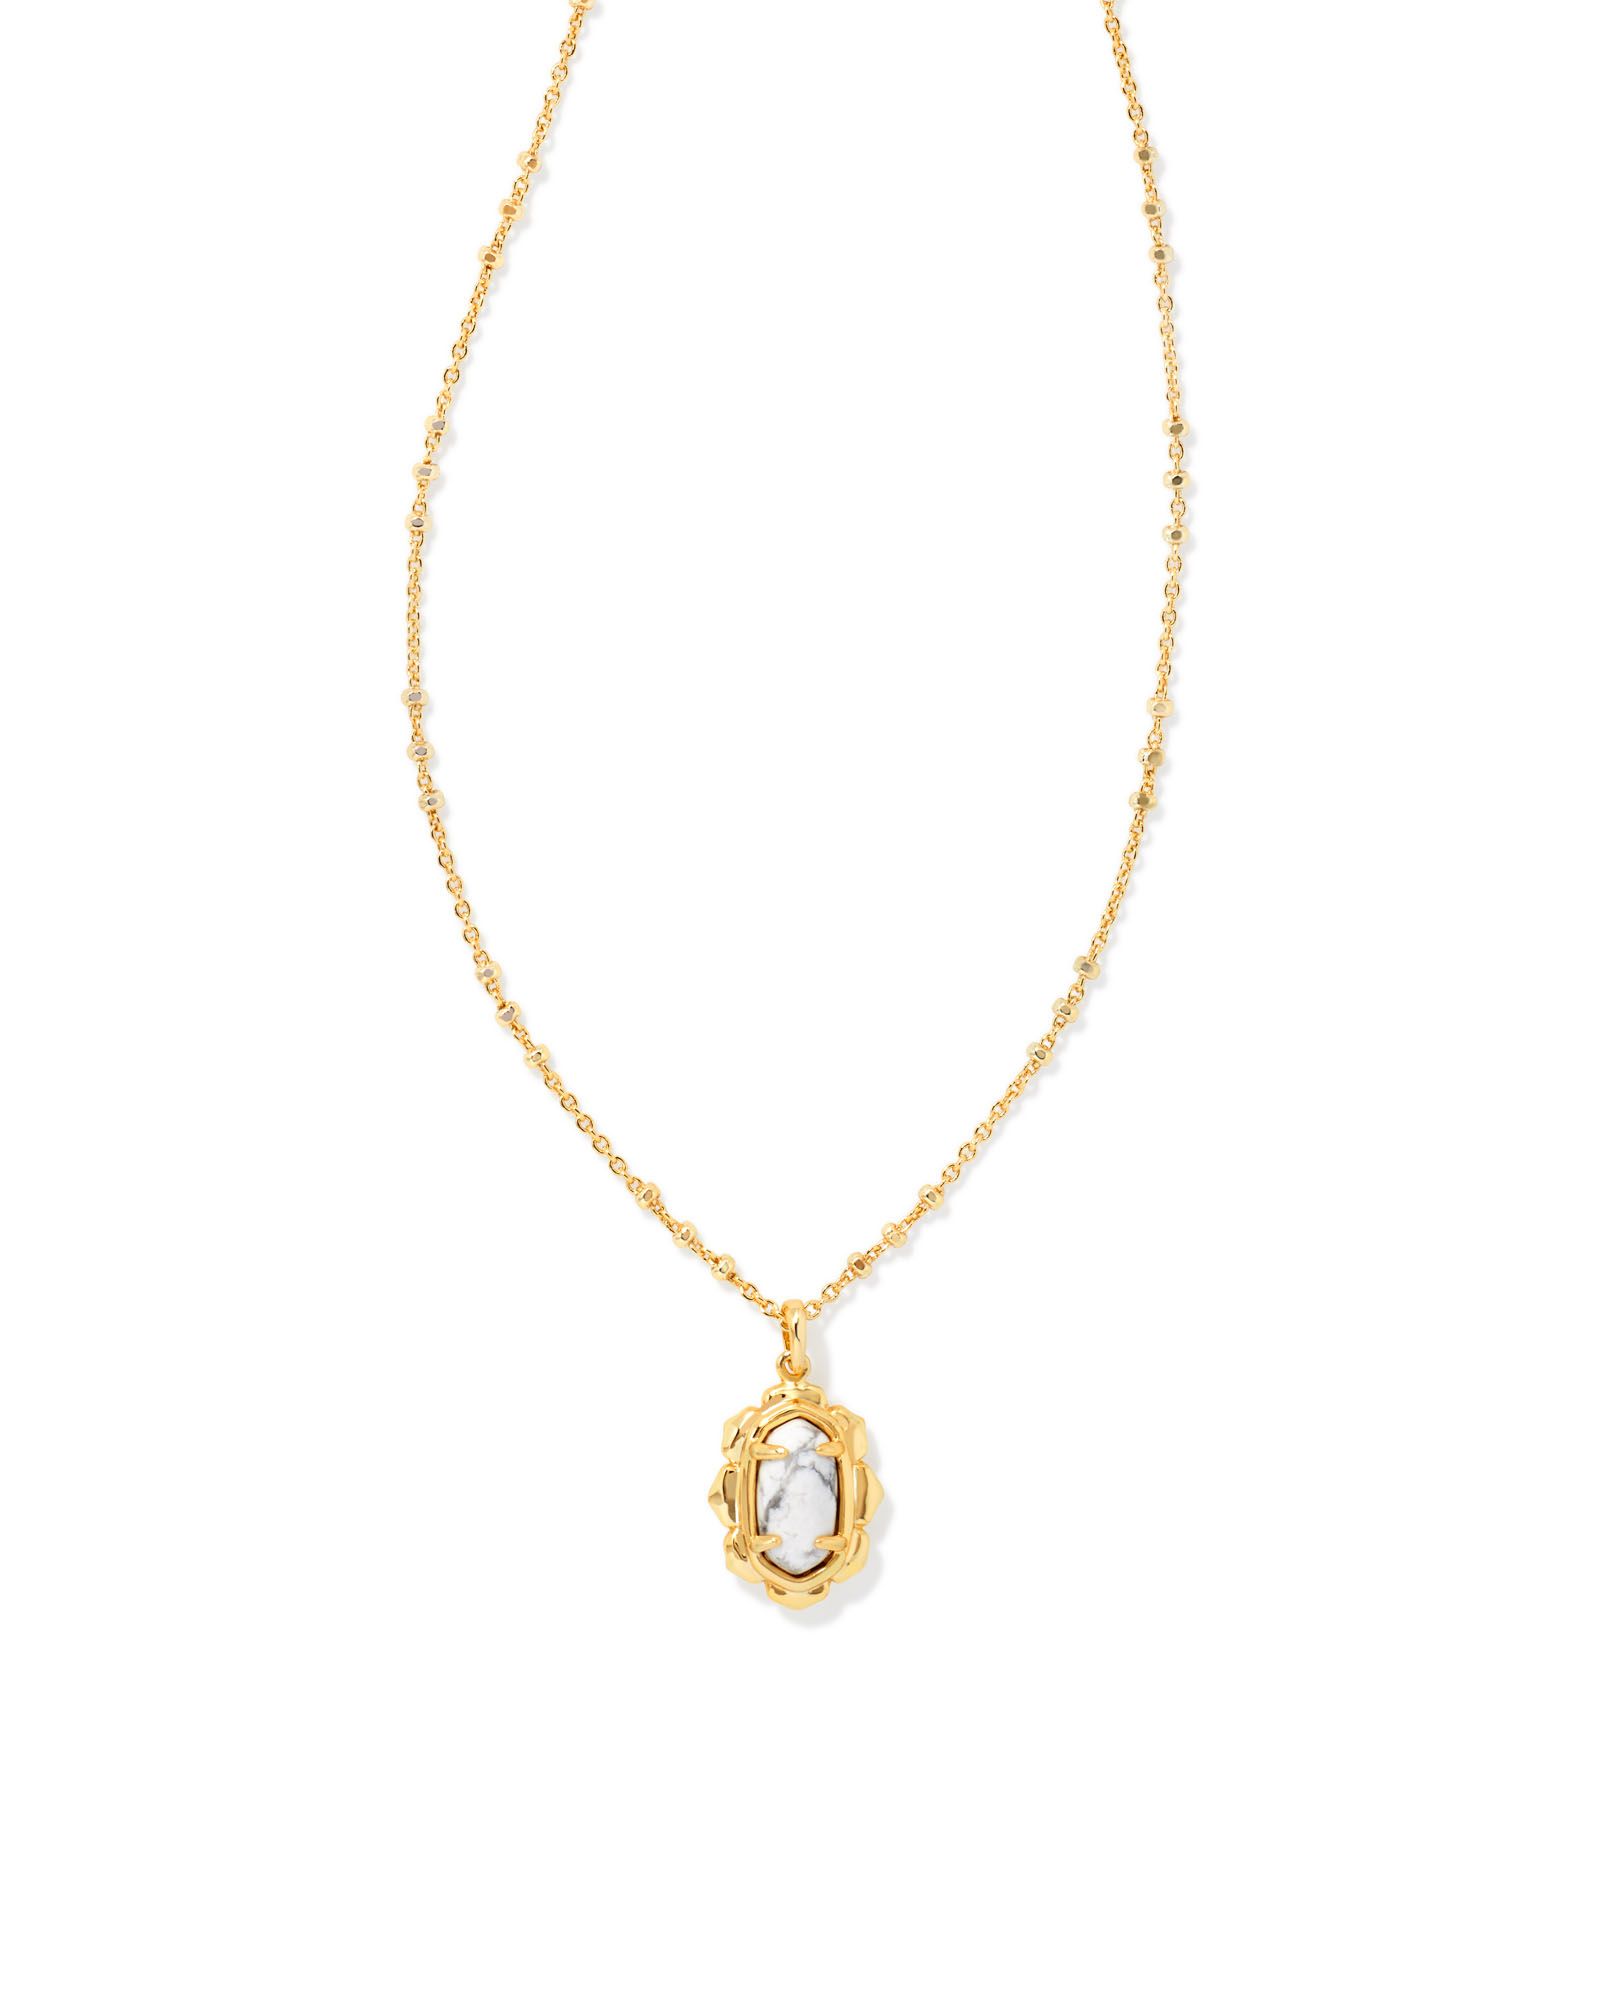 Piper Gold Pendant Necklace in White Howlite | Kendra Scott